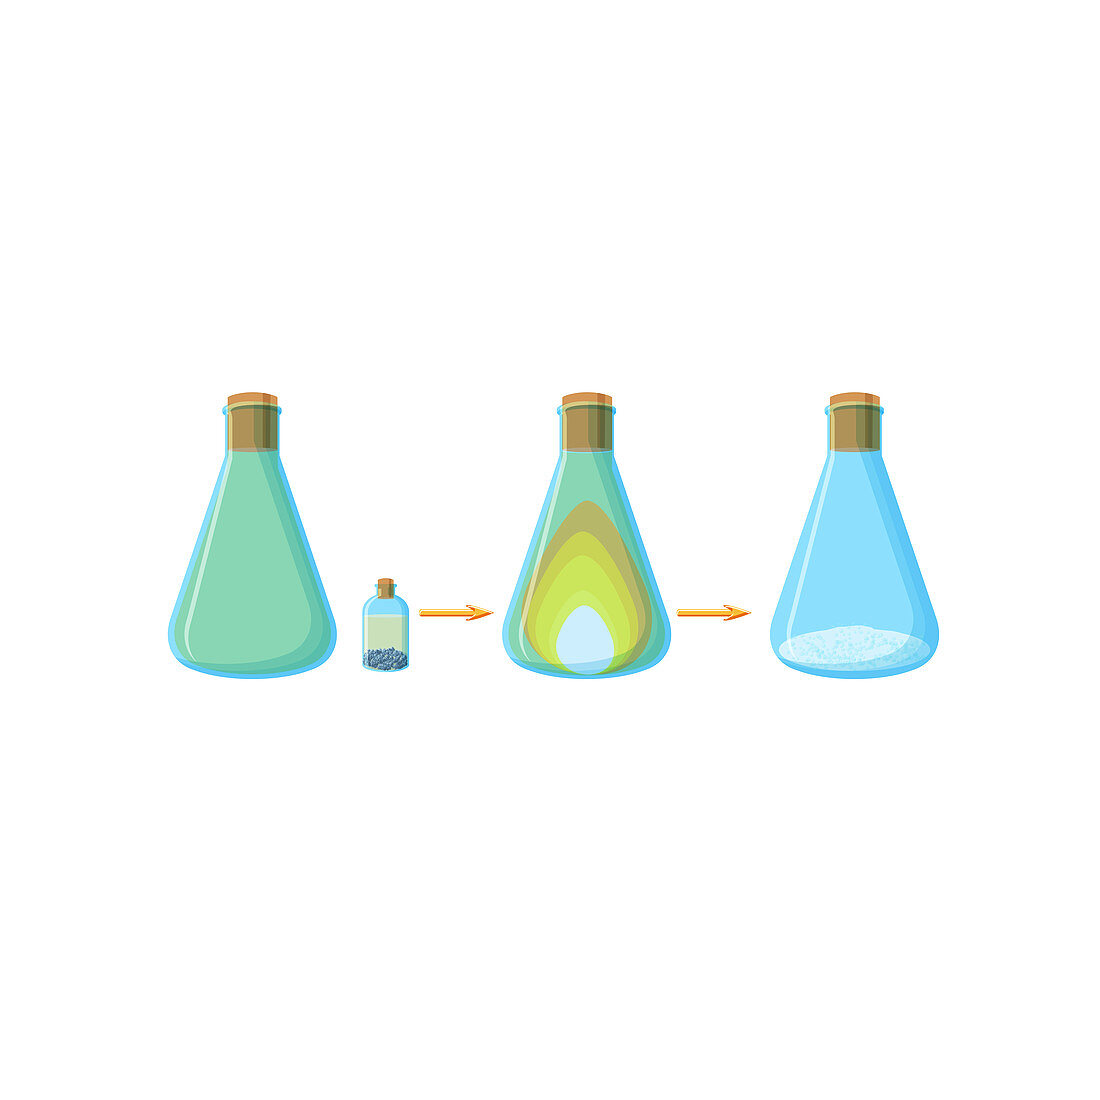 Synthesis of sodium chloride, illustration